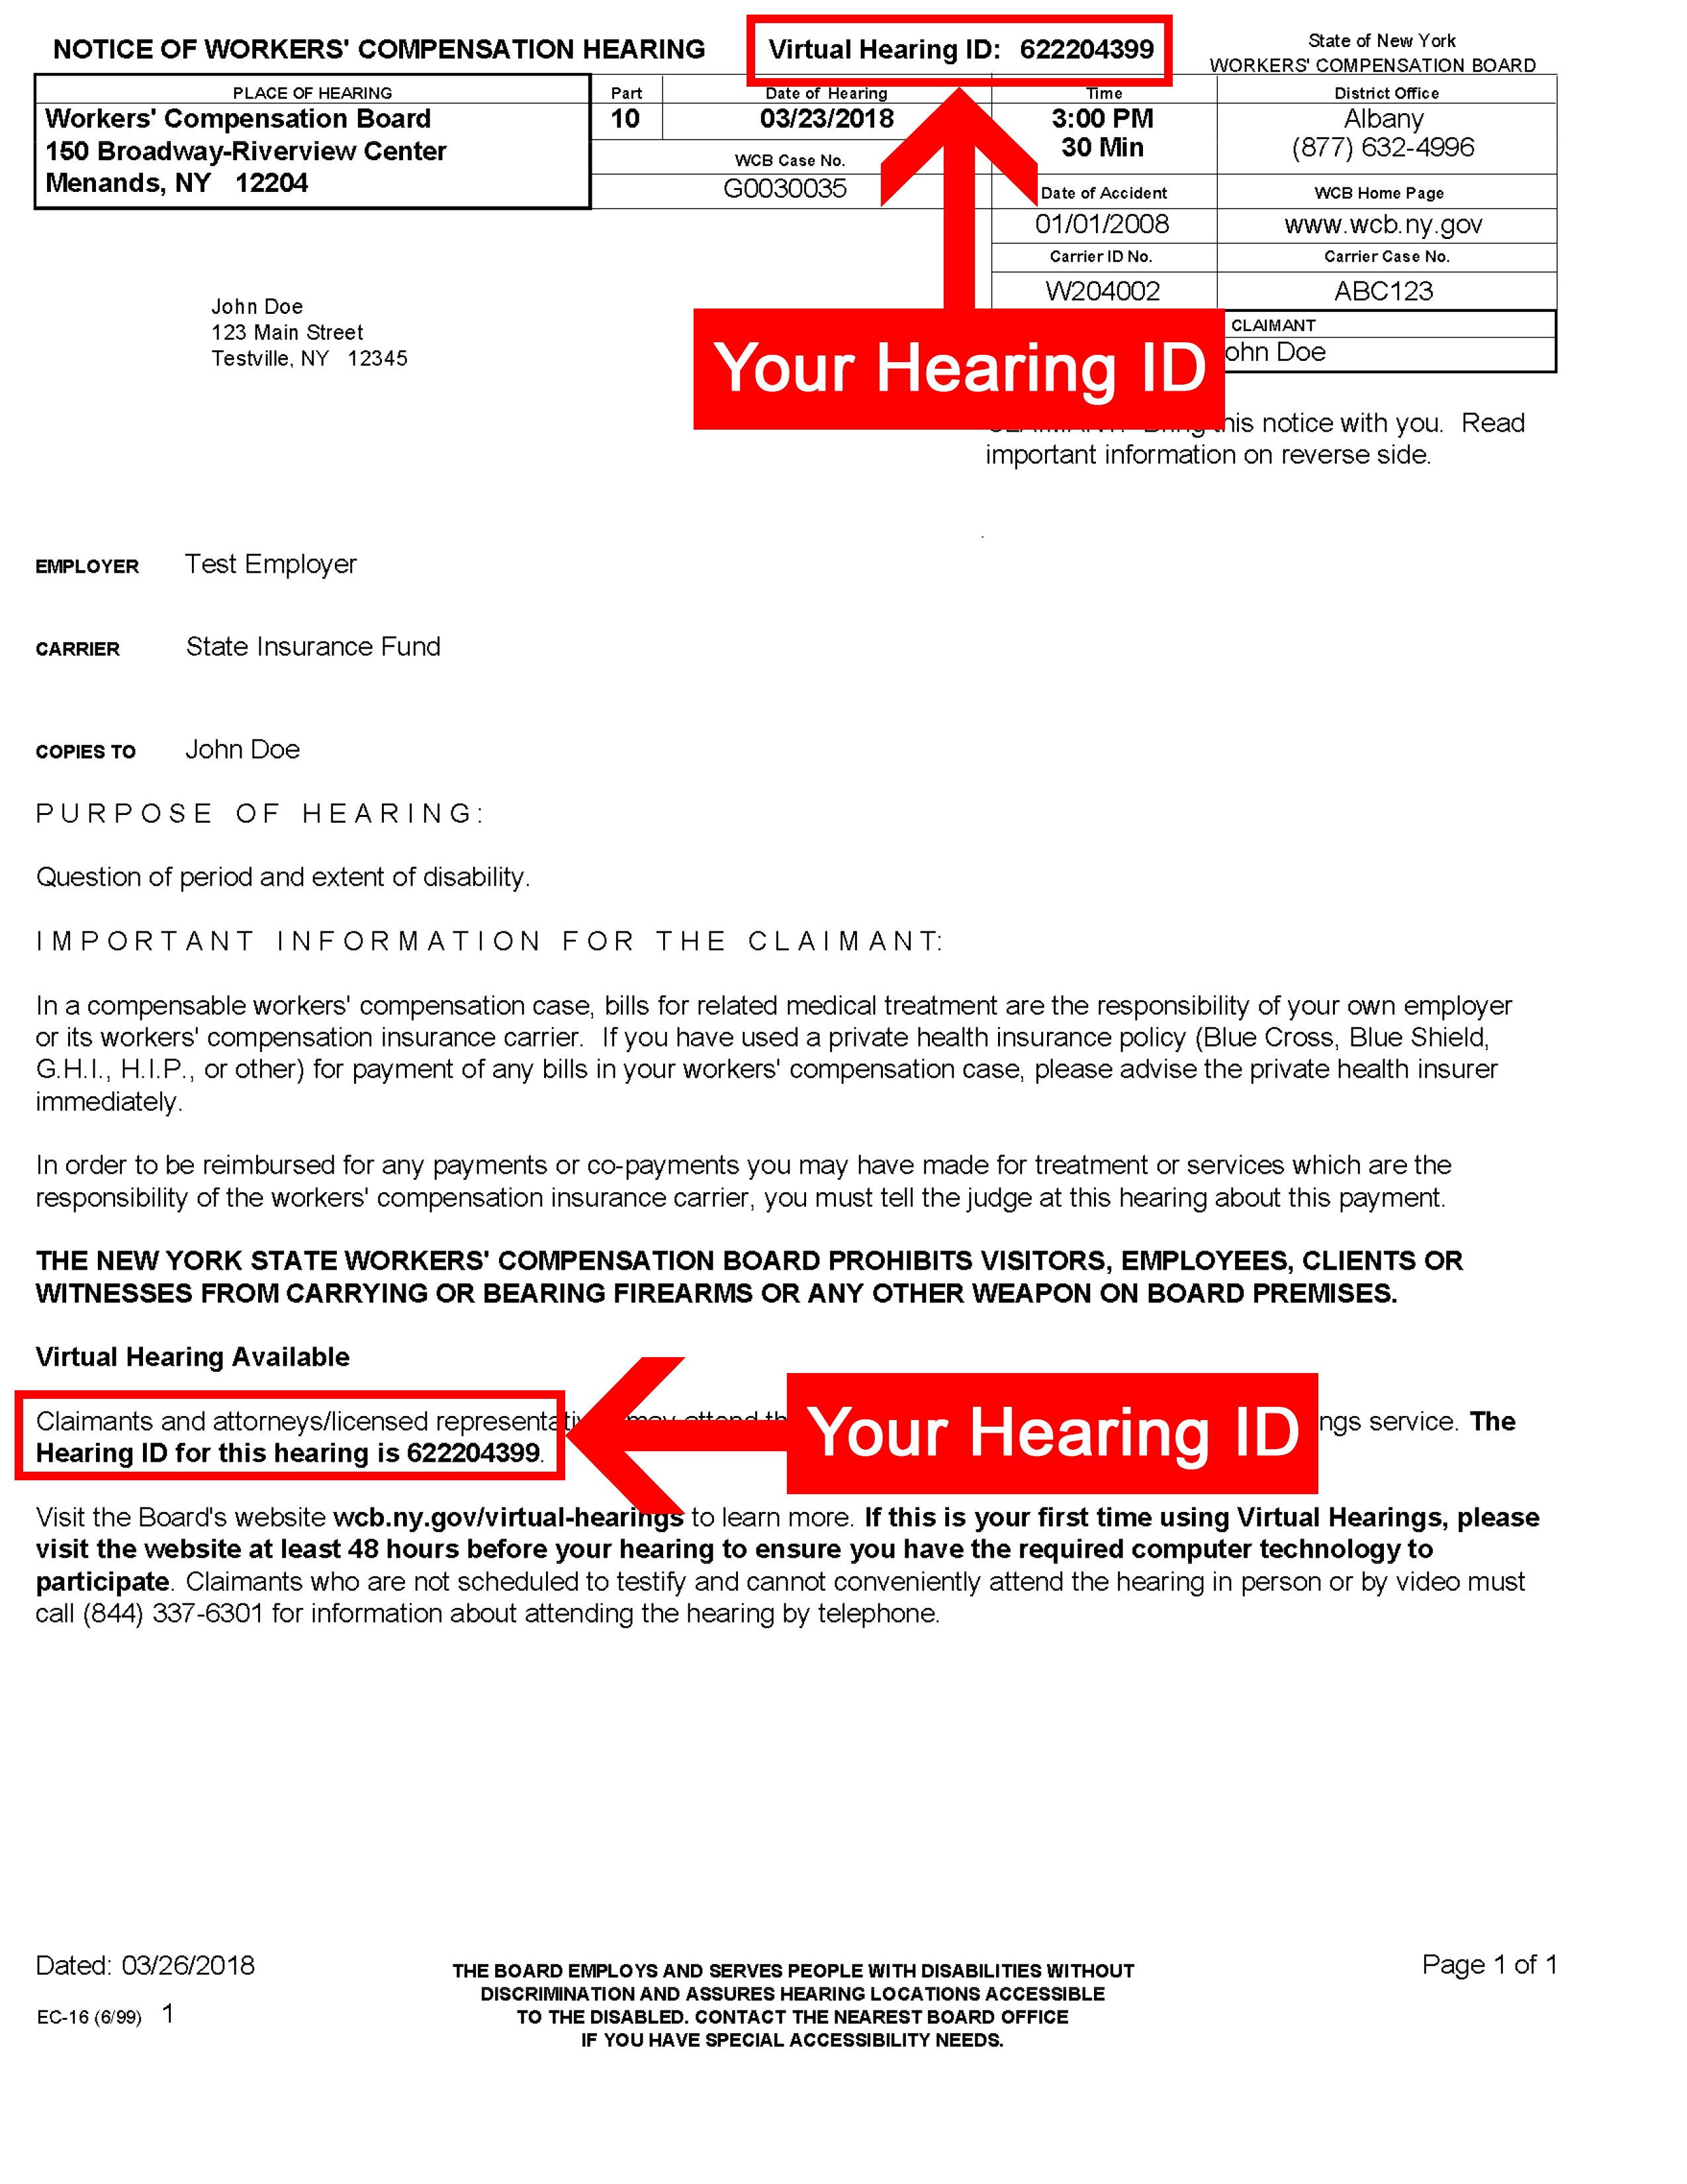 Sample Hearing Notice